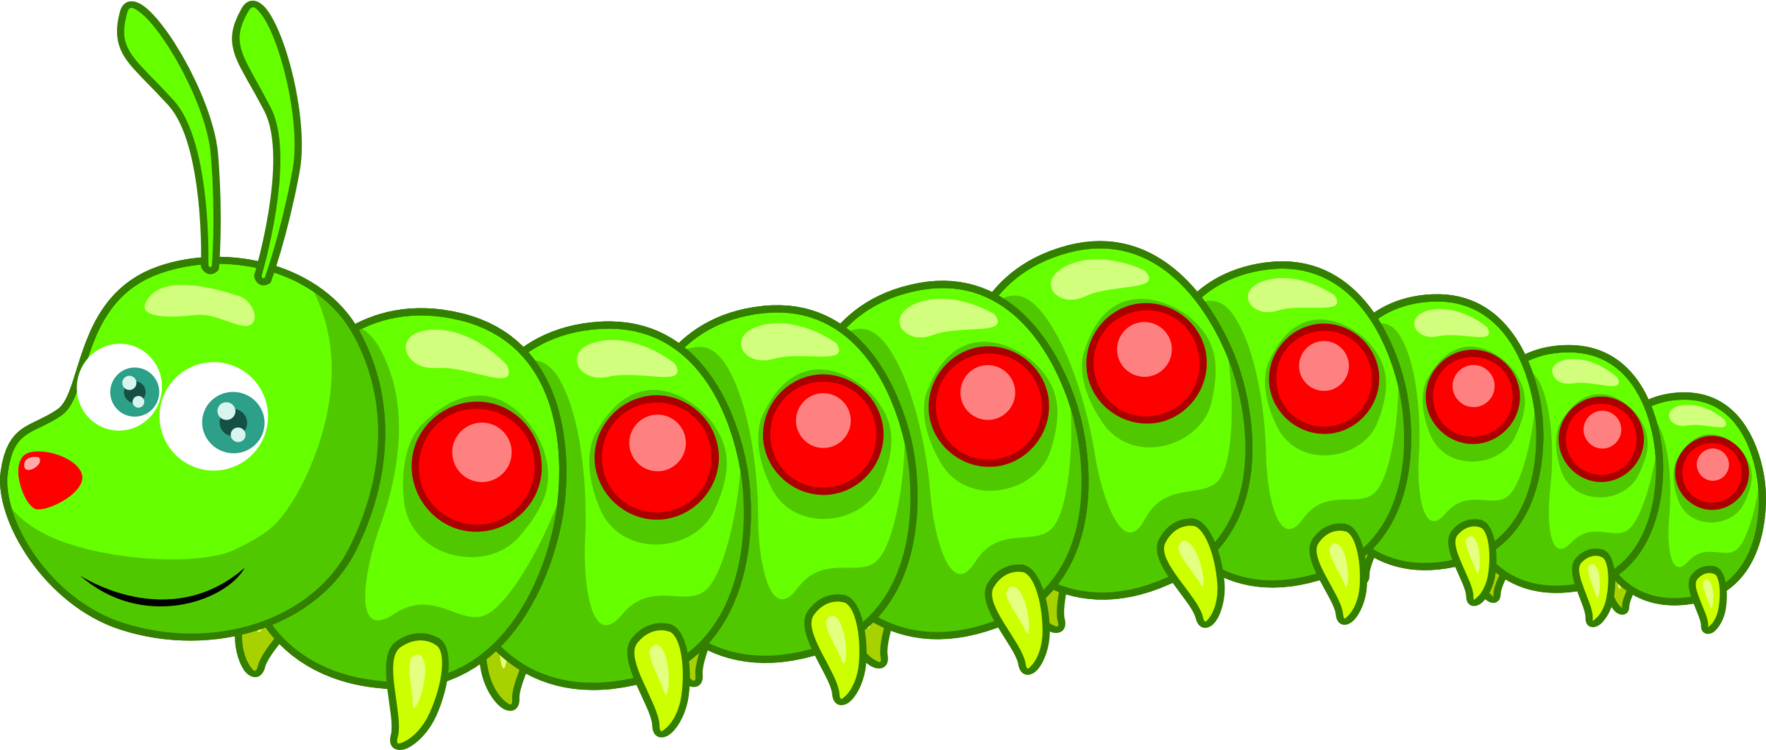 Clip art Caterpillar Image Cartoon Drawing